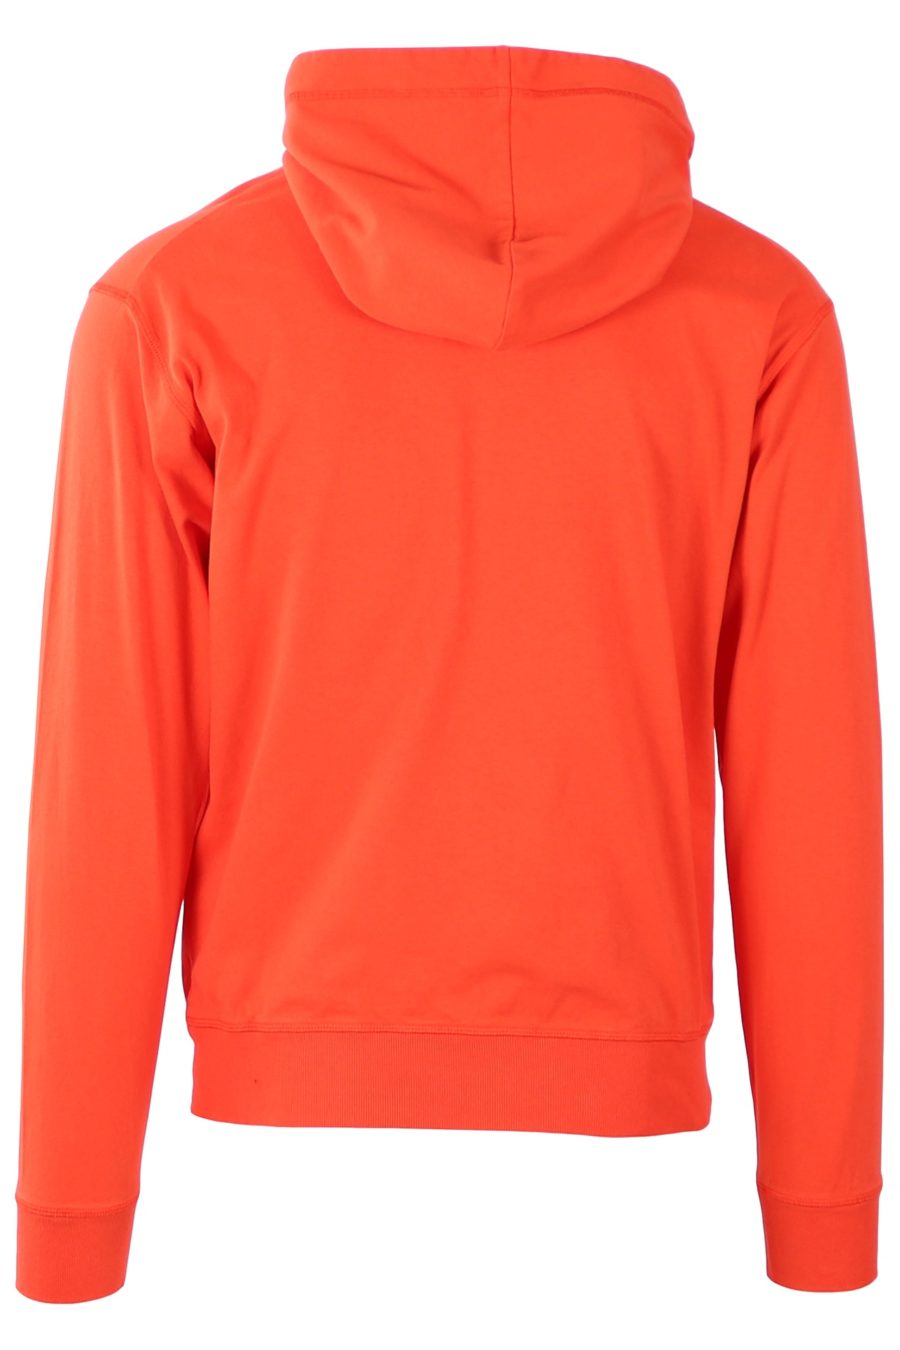 Sweatshirt Dsquared2 orange mit blauem Logo - 33ae9fd0dd1ea8409b32dad3e668823e3d534993